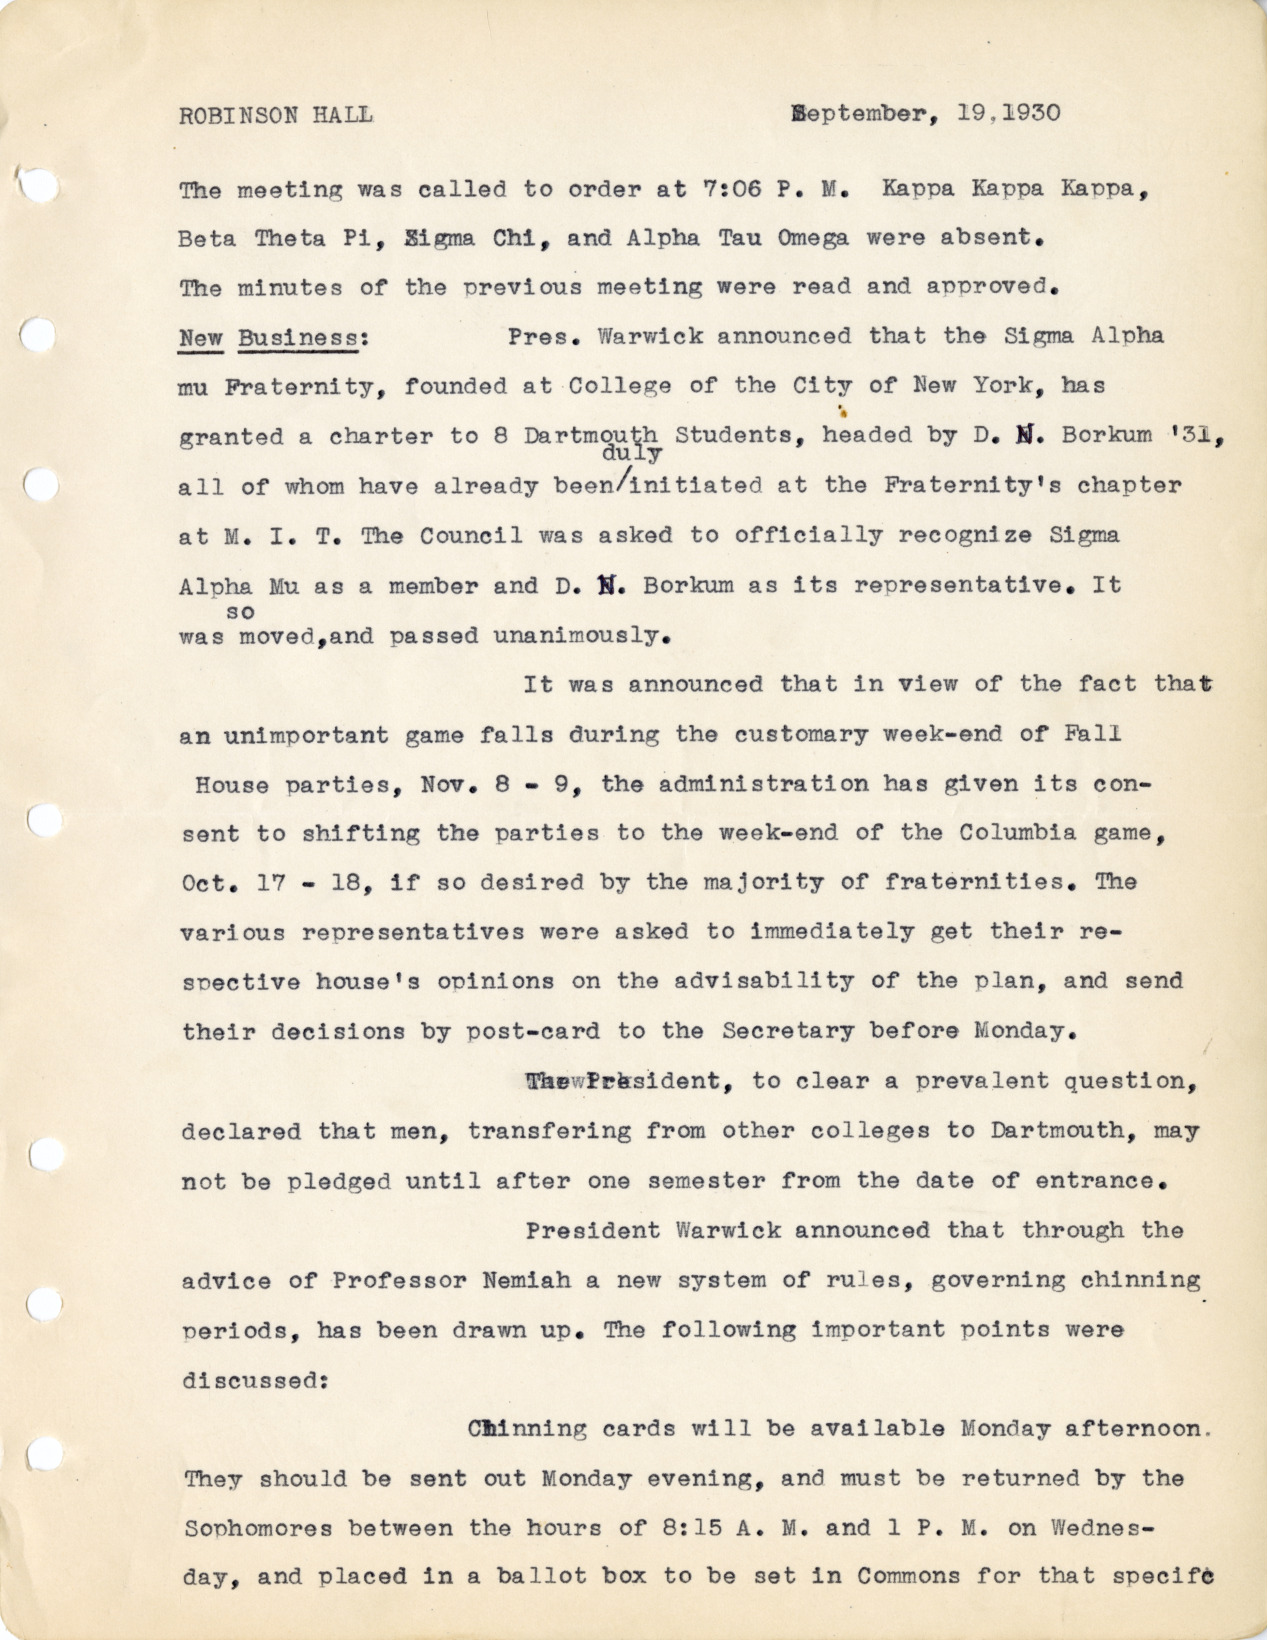 September 19, 1930 IFC Meeting Minutes